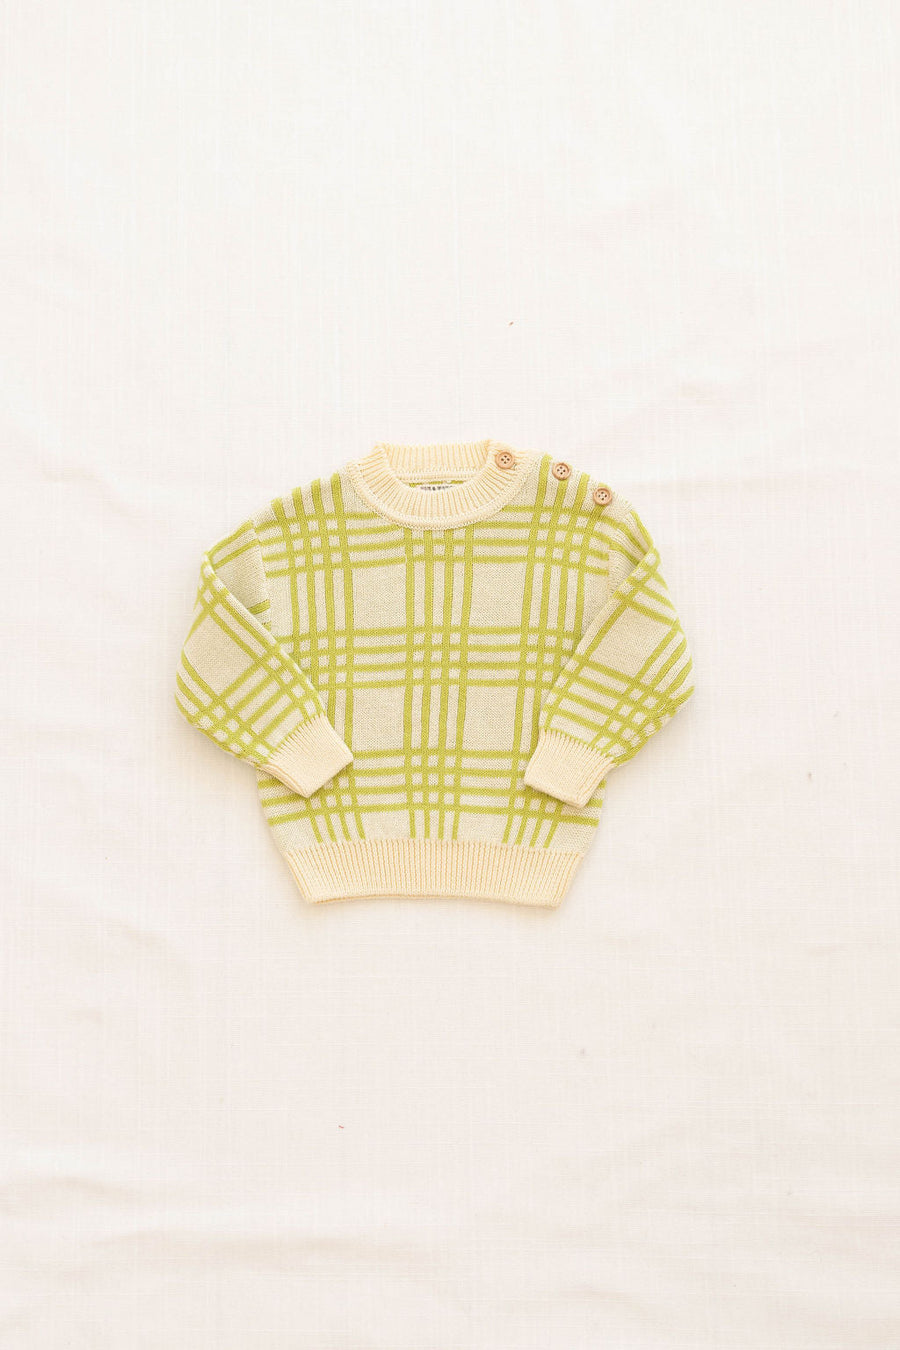 Fin & Vince Harbor Sweater - Grass Plaid